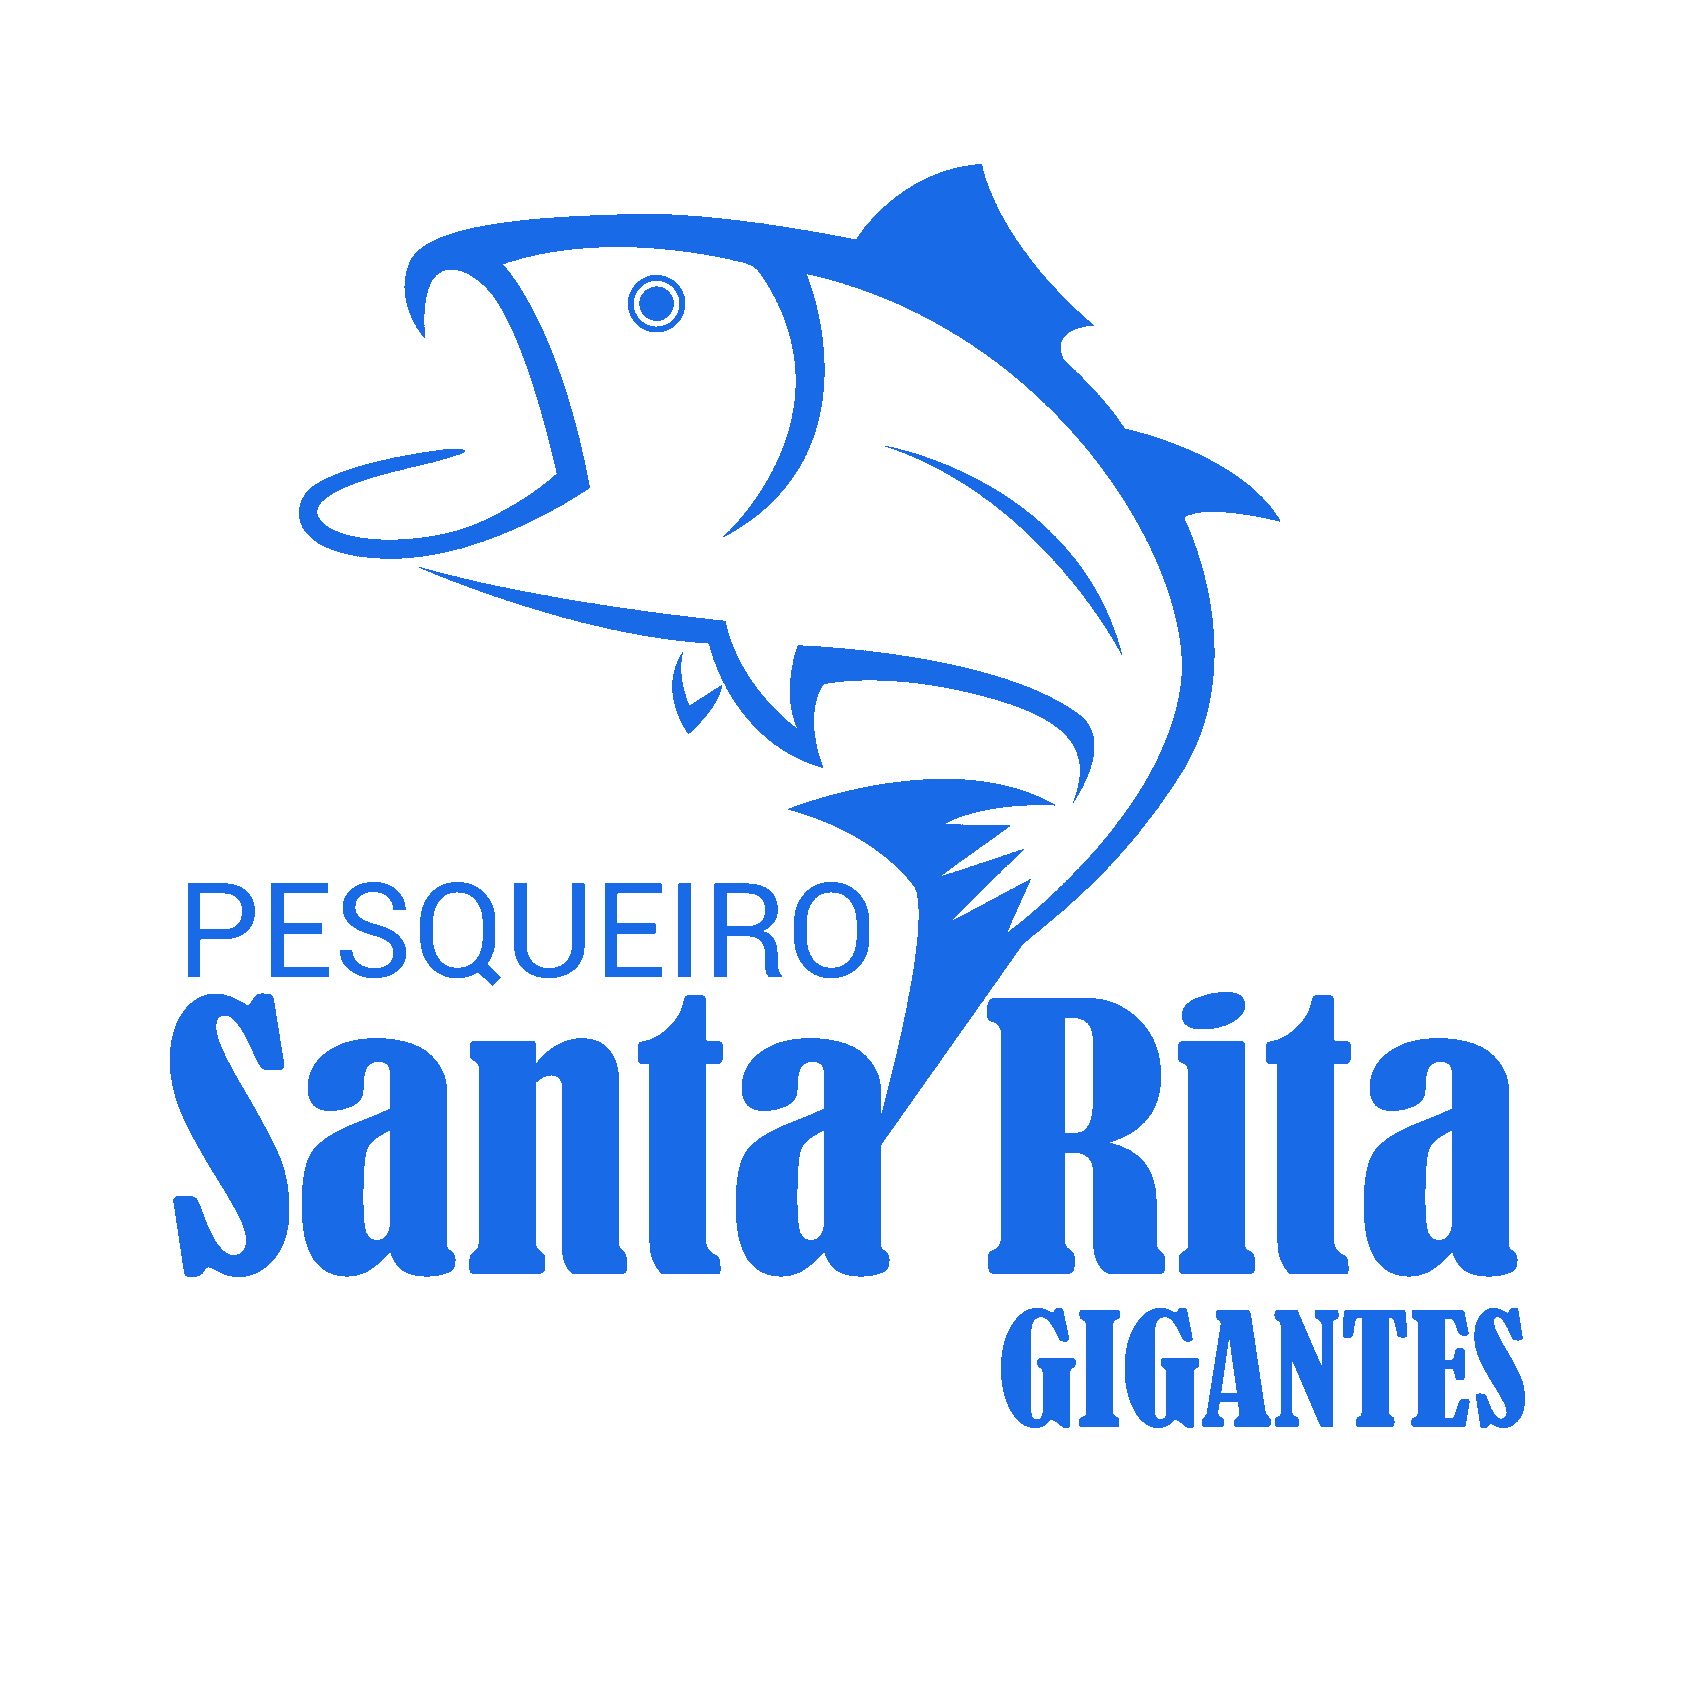 Santa Rita Gigantes